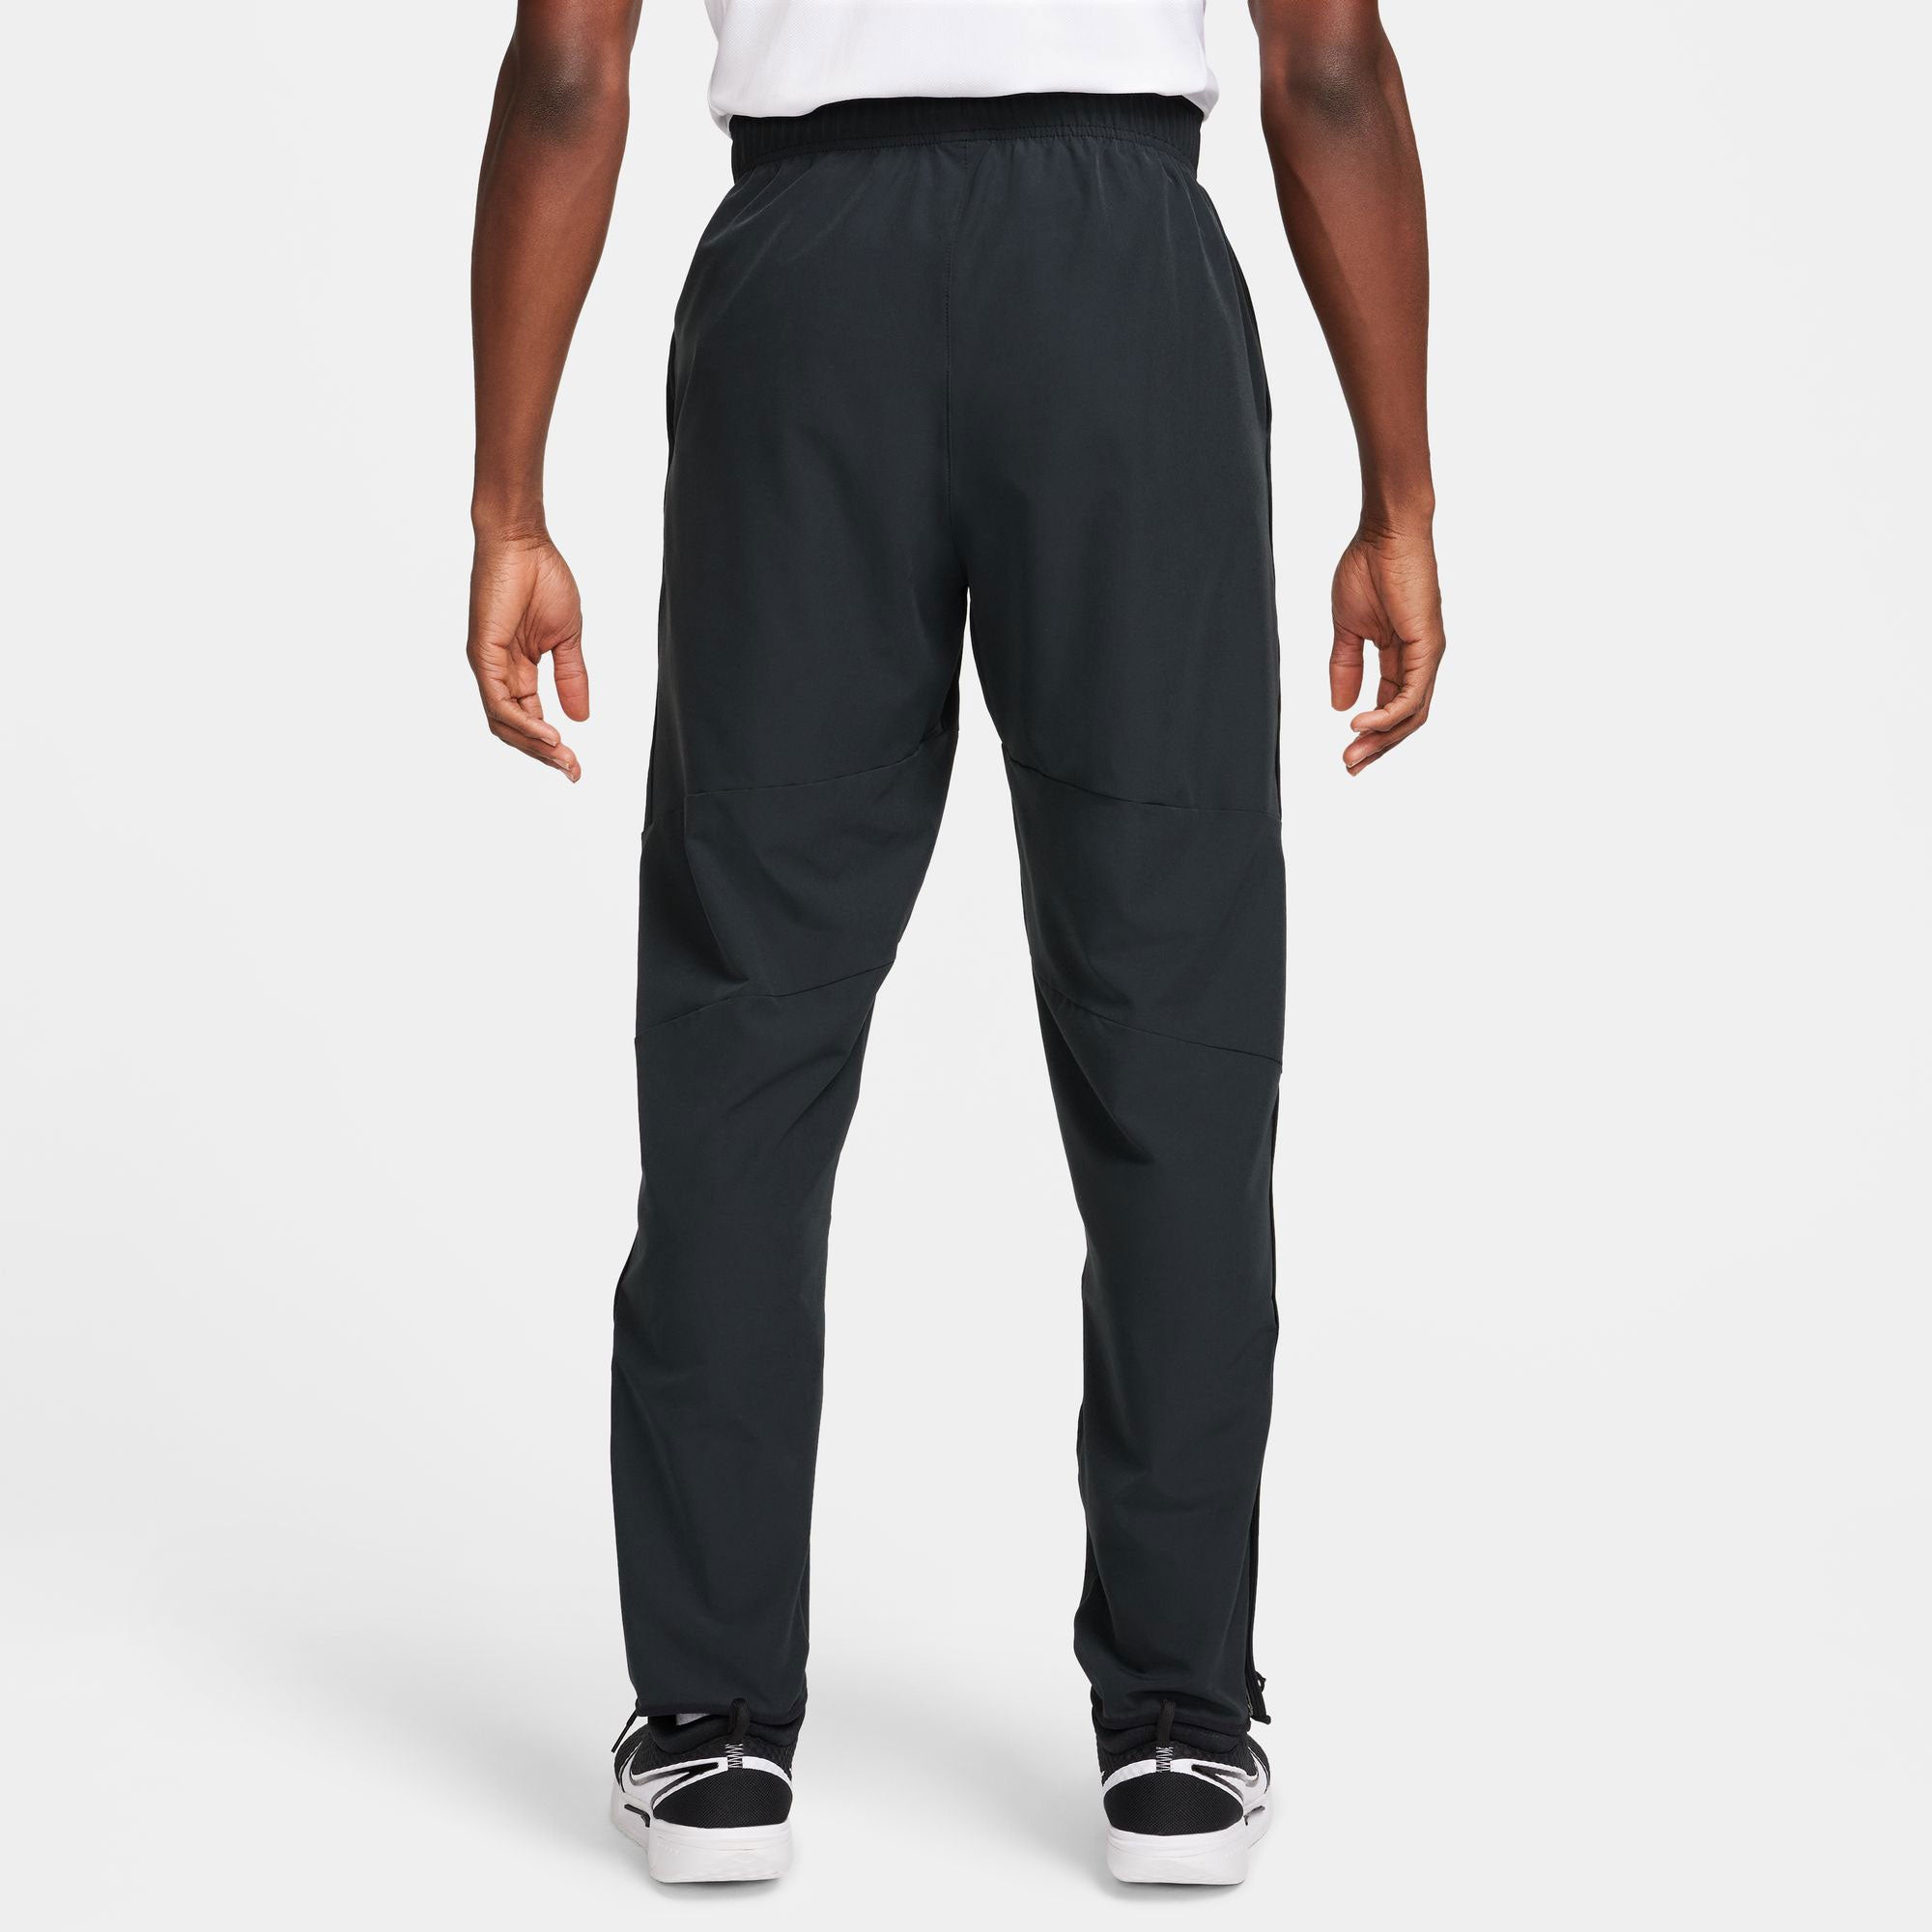 NikeCourt Advantage Men's Dri-FIT Tennis Pants - Black (2)